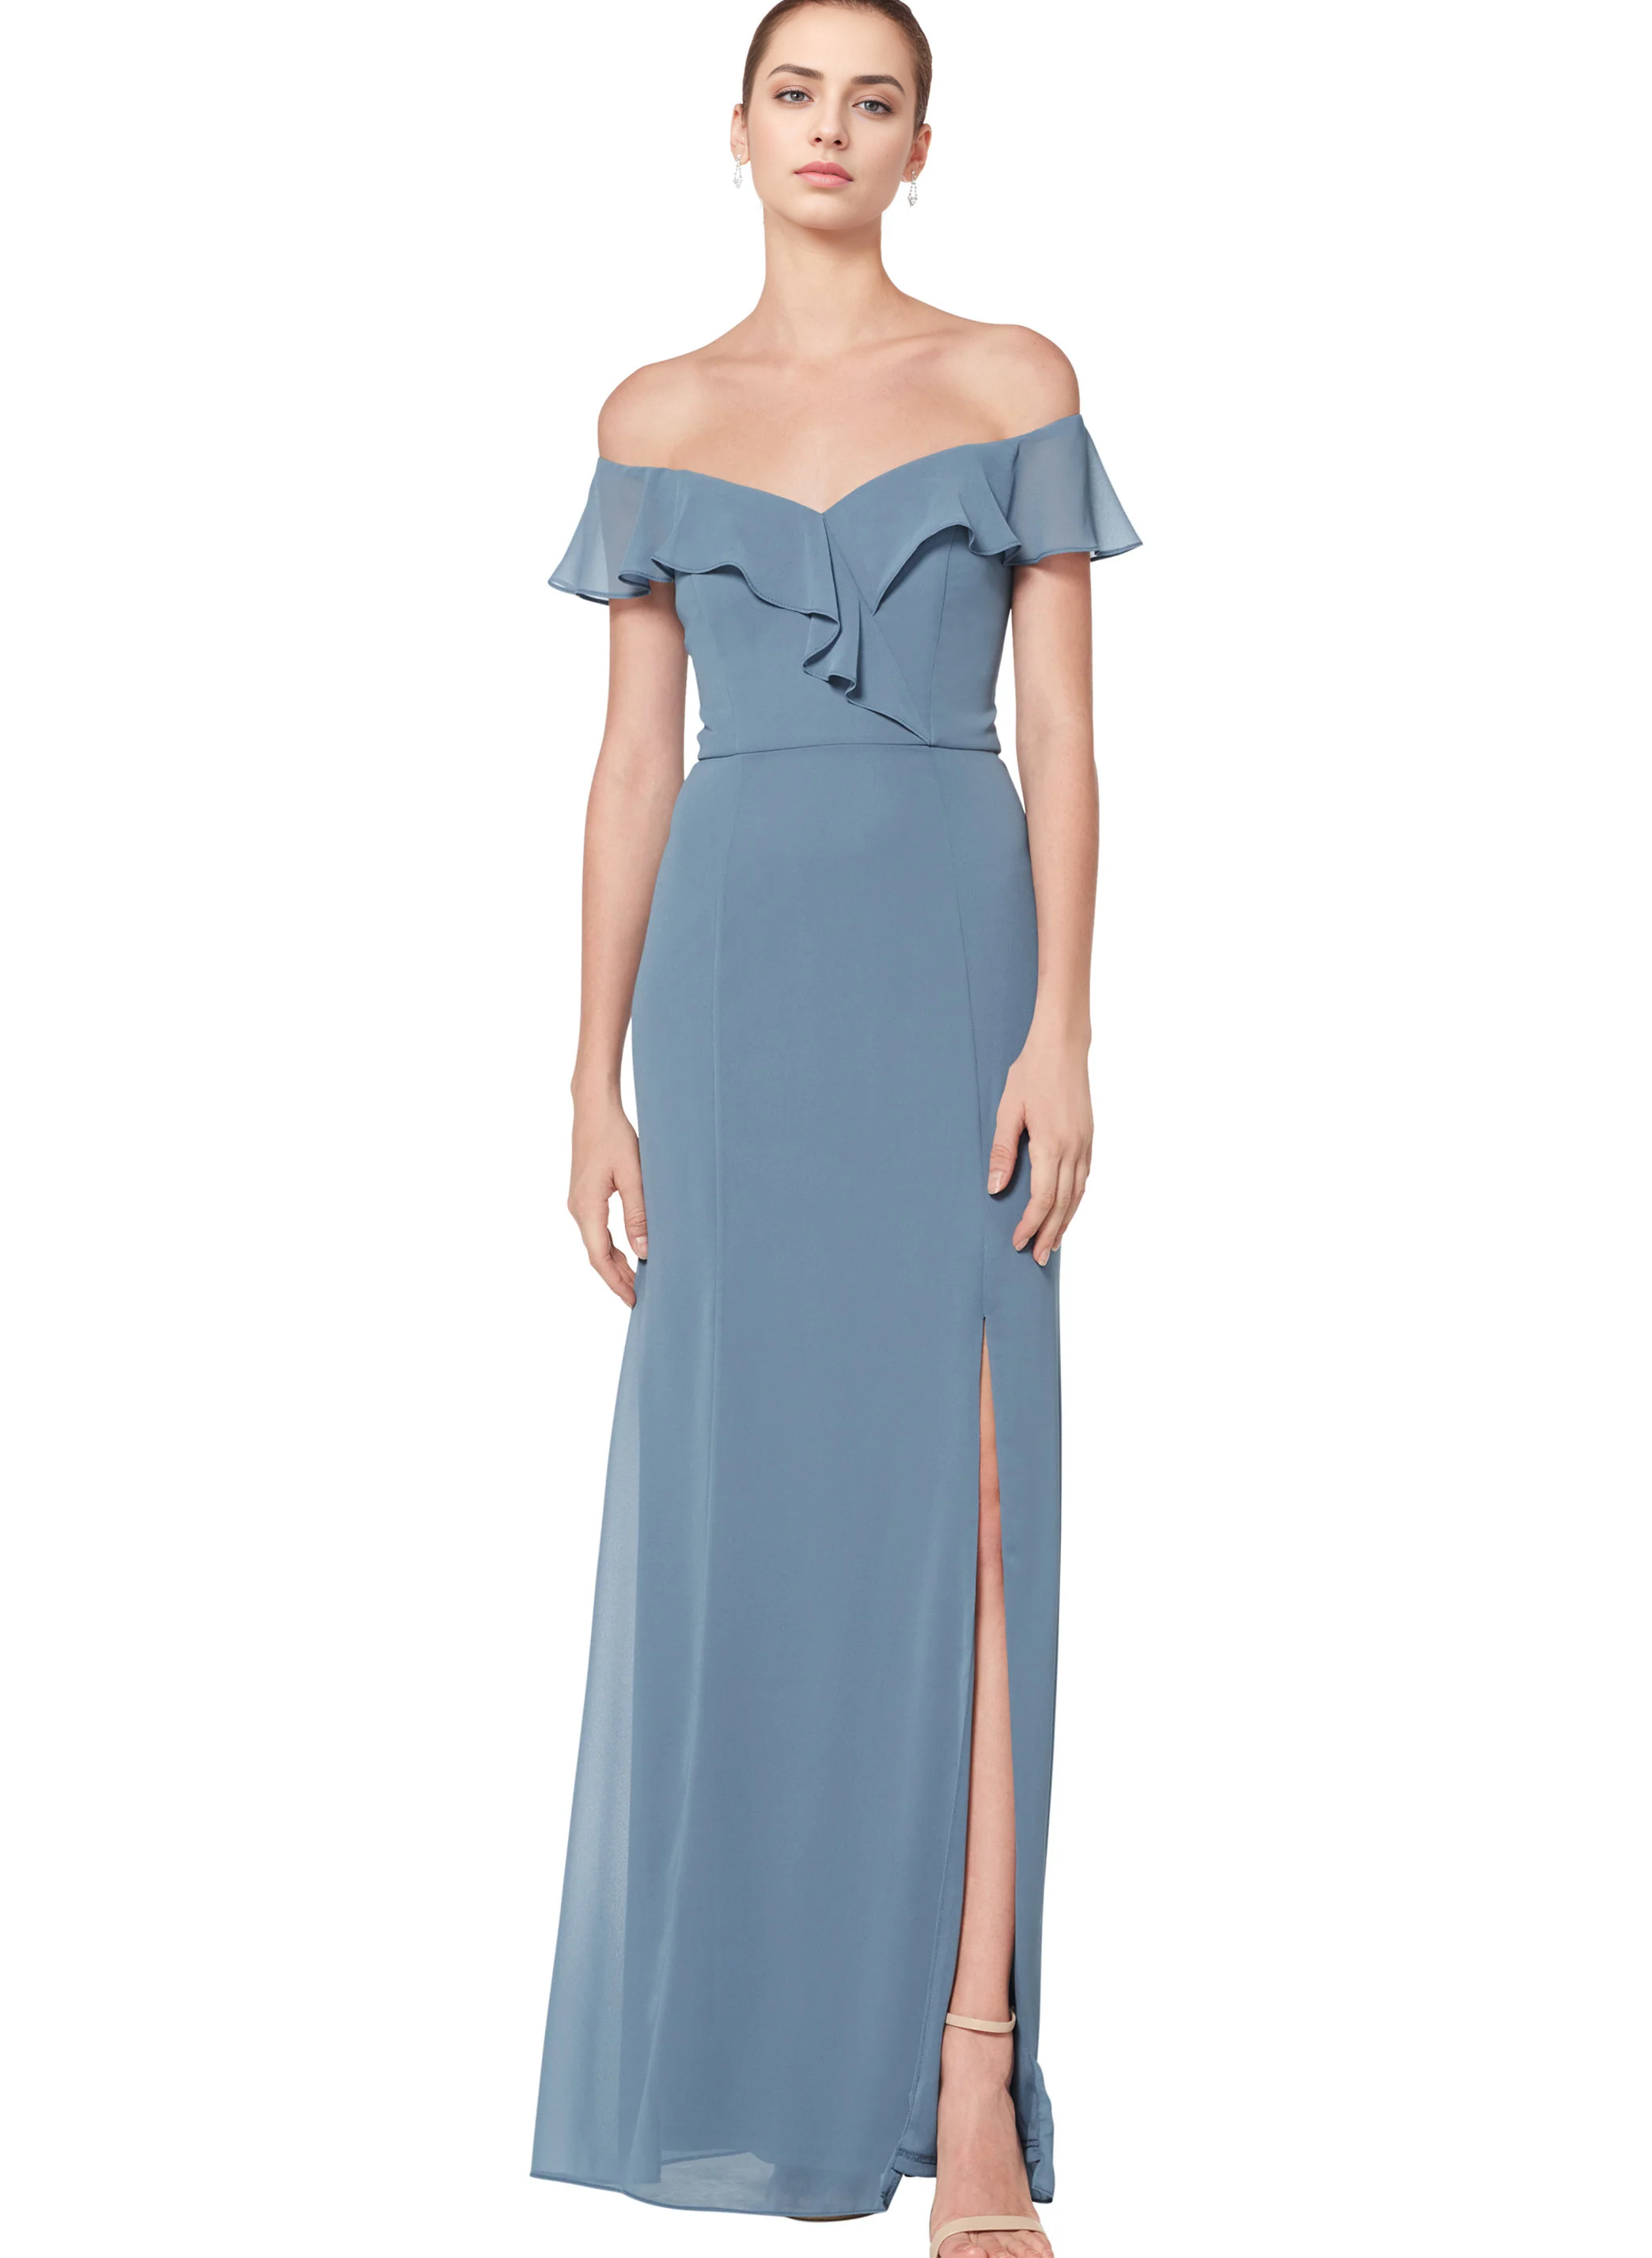 Blue Off-The-Shoulder Sheath/Column Bridesmaid Dresses With Split Front